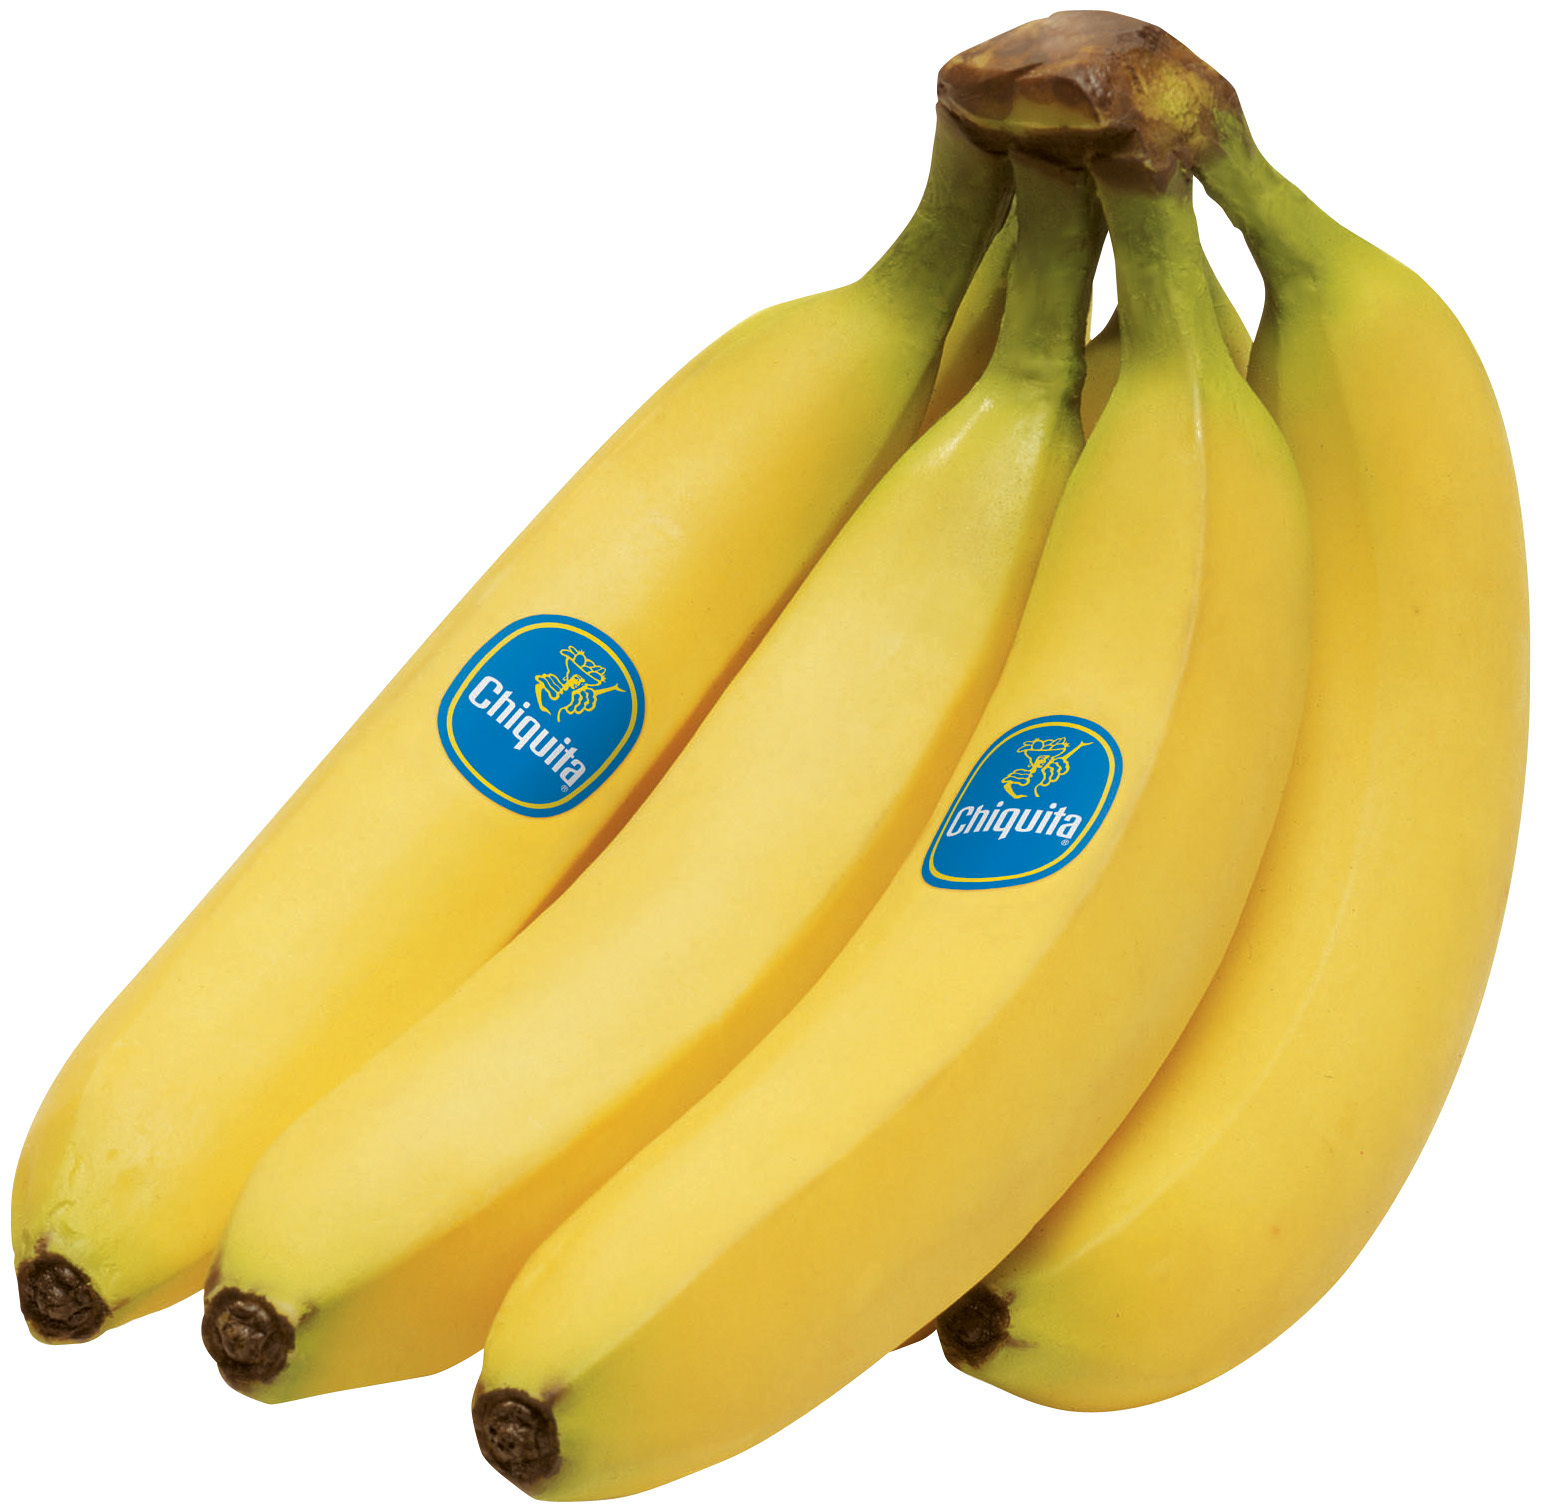 Chiquita Banana Case Review